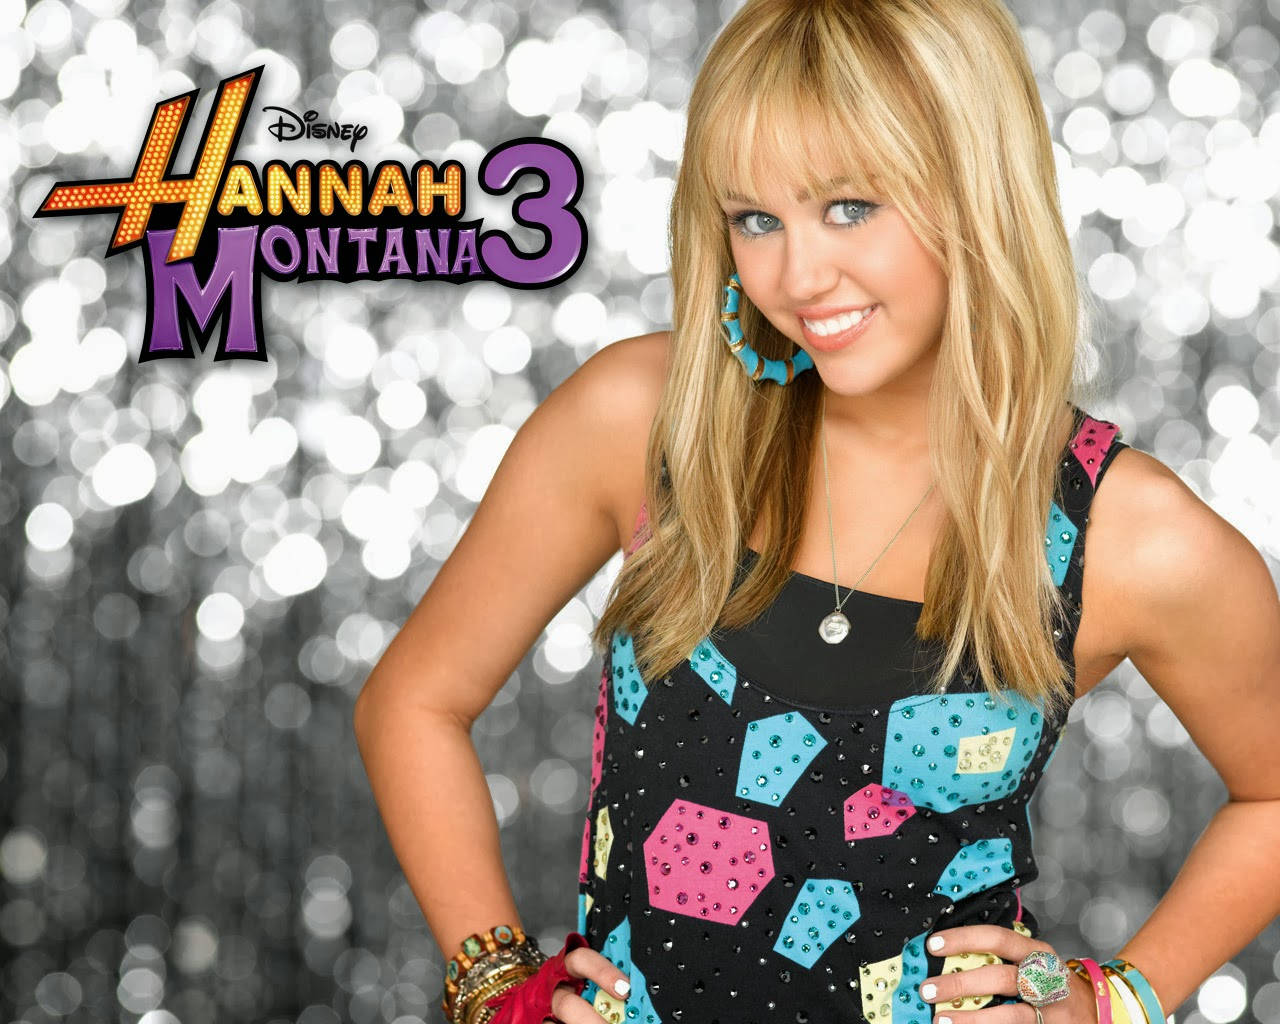 Hannah Montana Season 3 Background